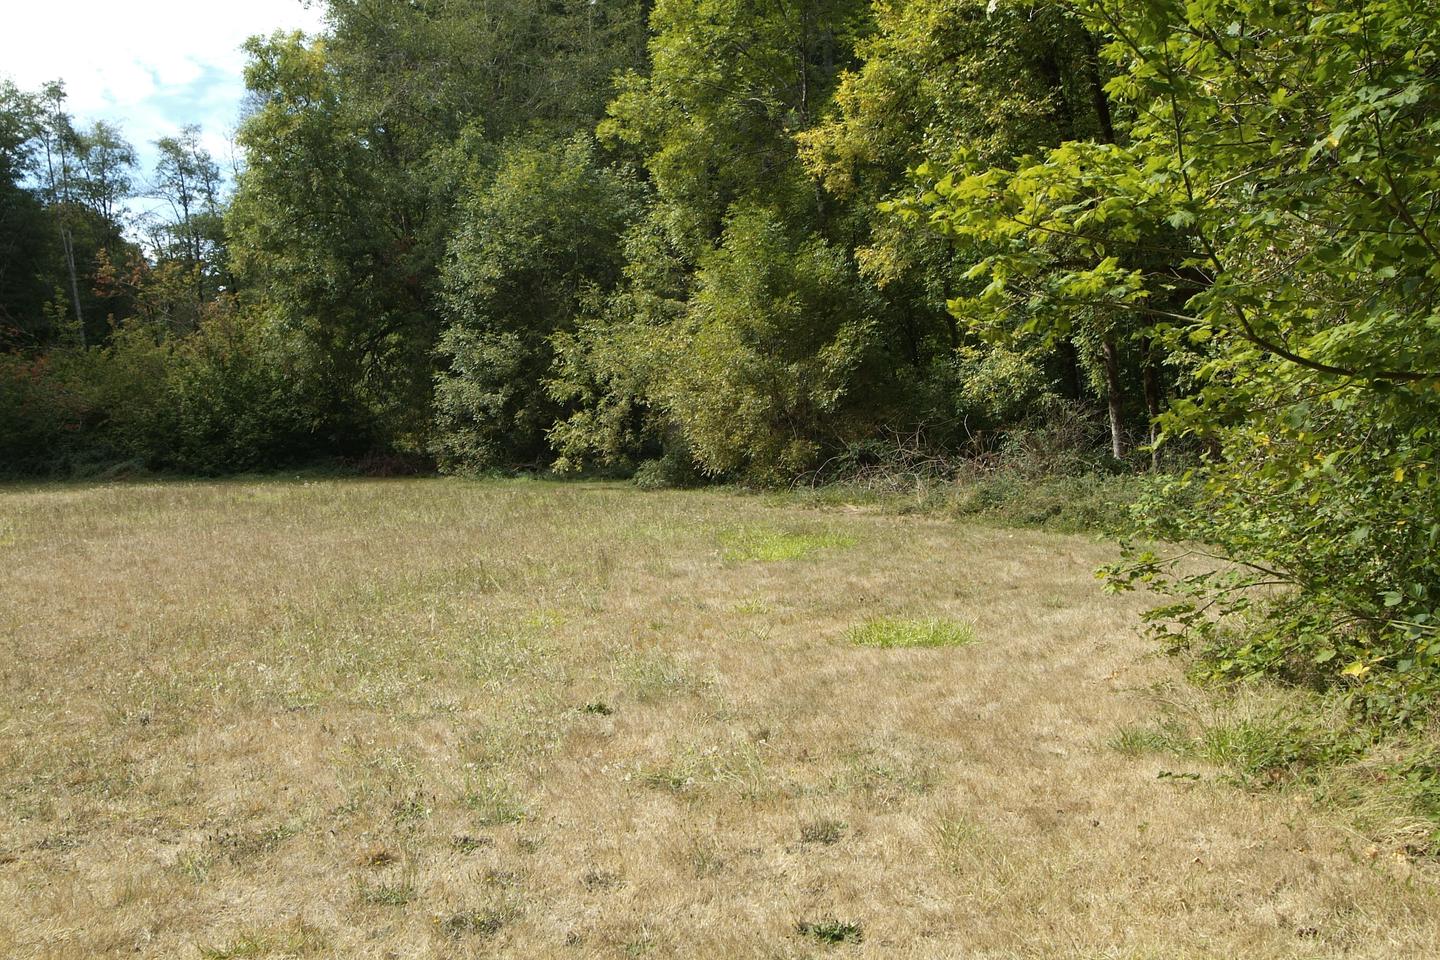 Field adjacent to shelter 2. 